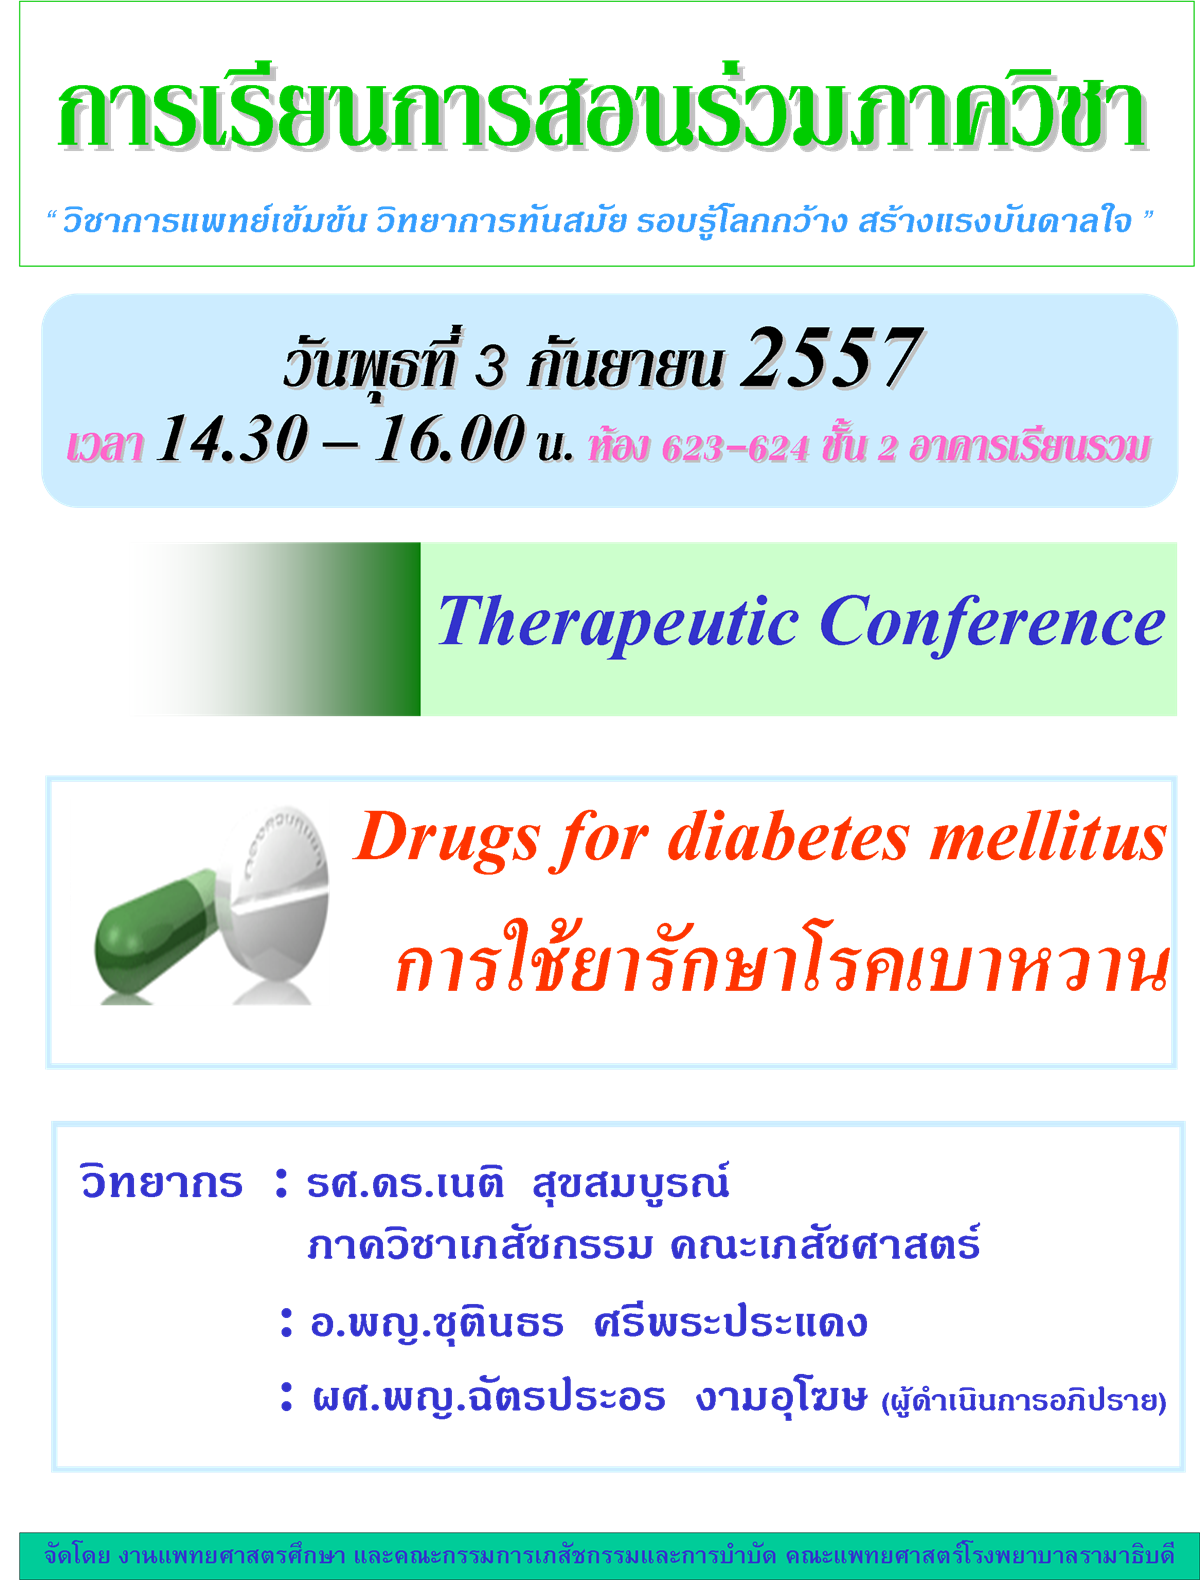 Therapeutic Conference